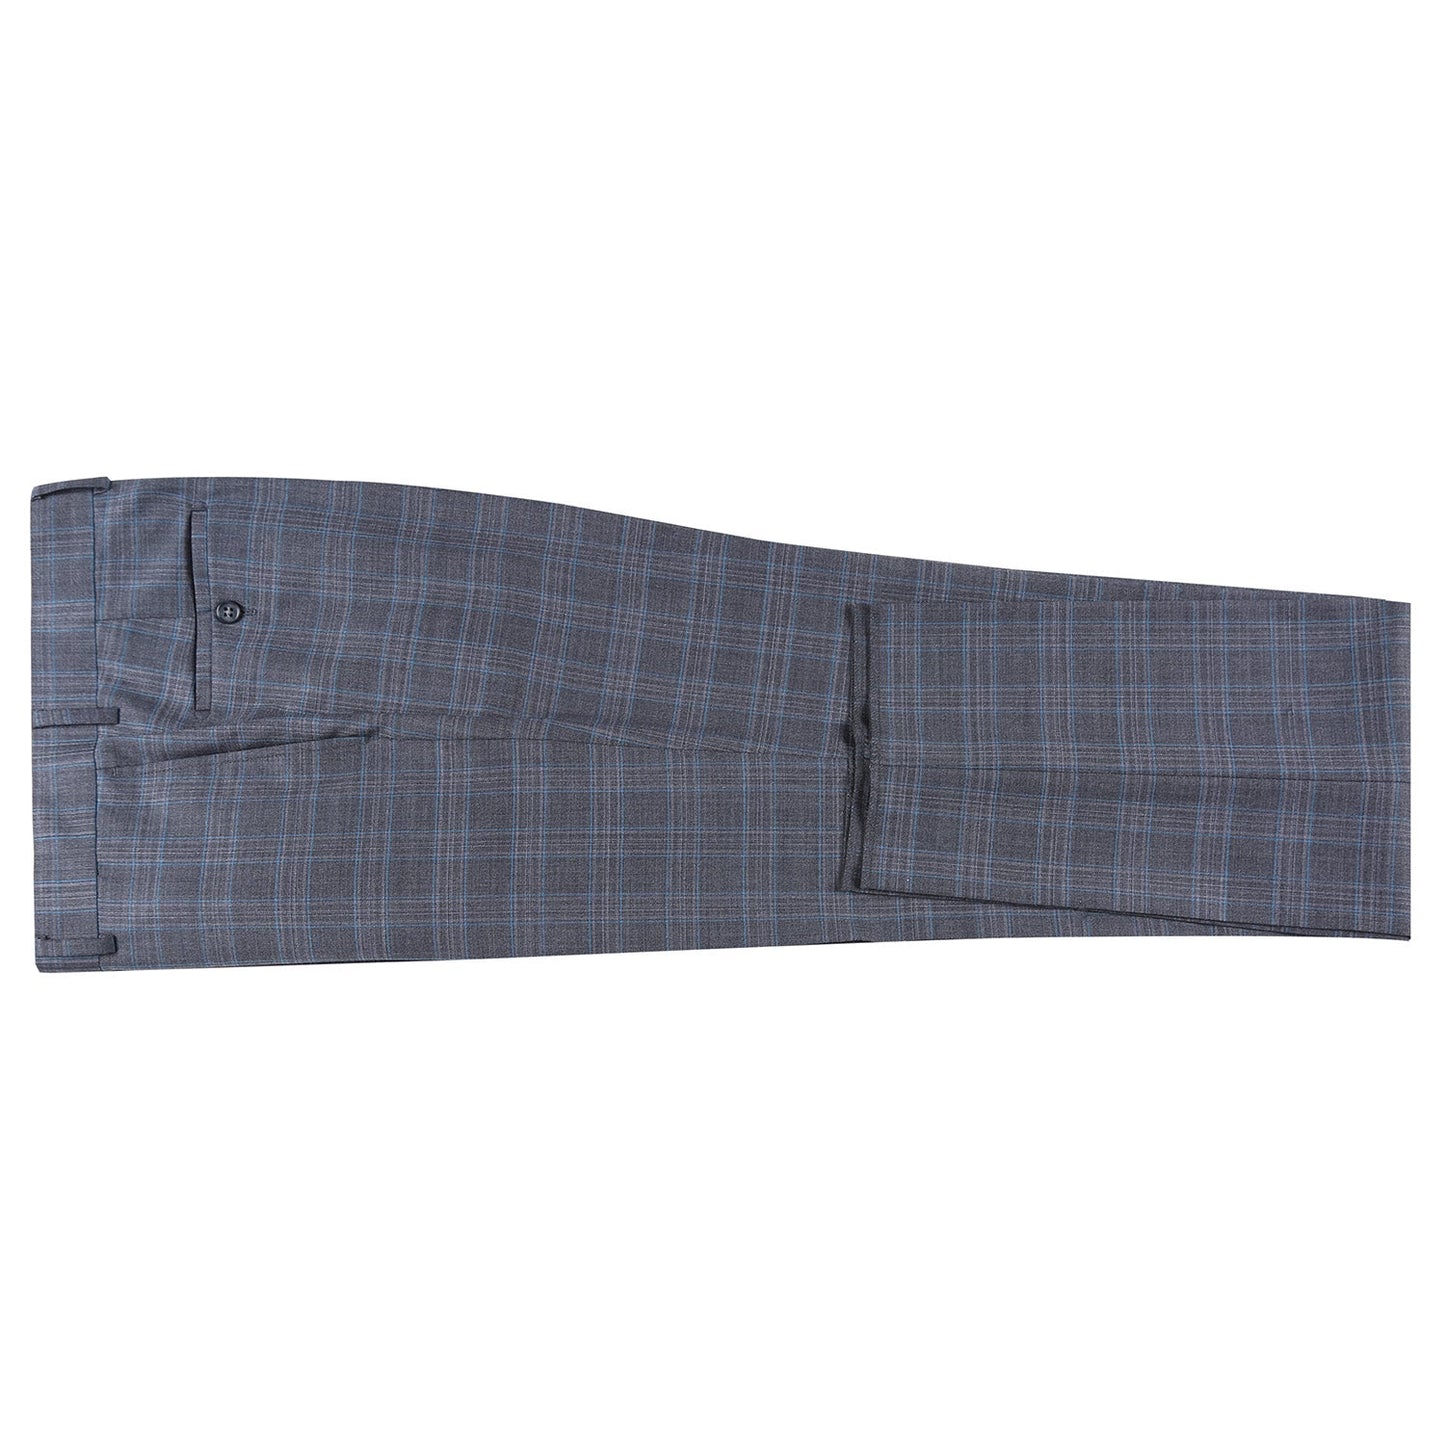 EL62-68-095 English Laundry Slim Fit Wool Blend Gray Plaid Peak Lapel Suit